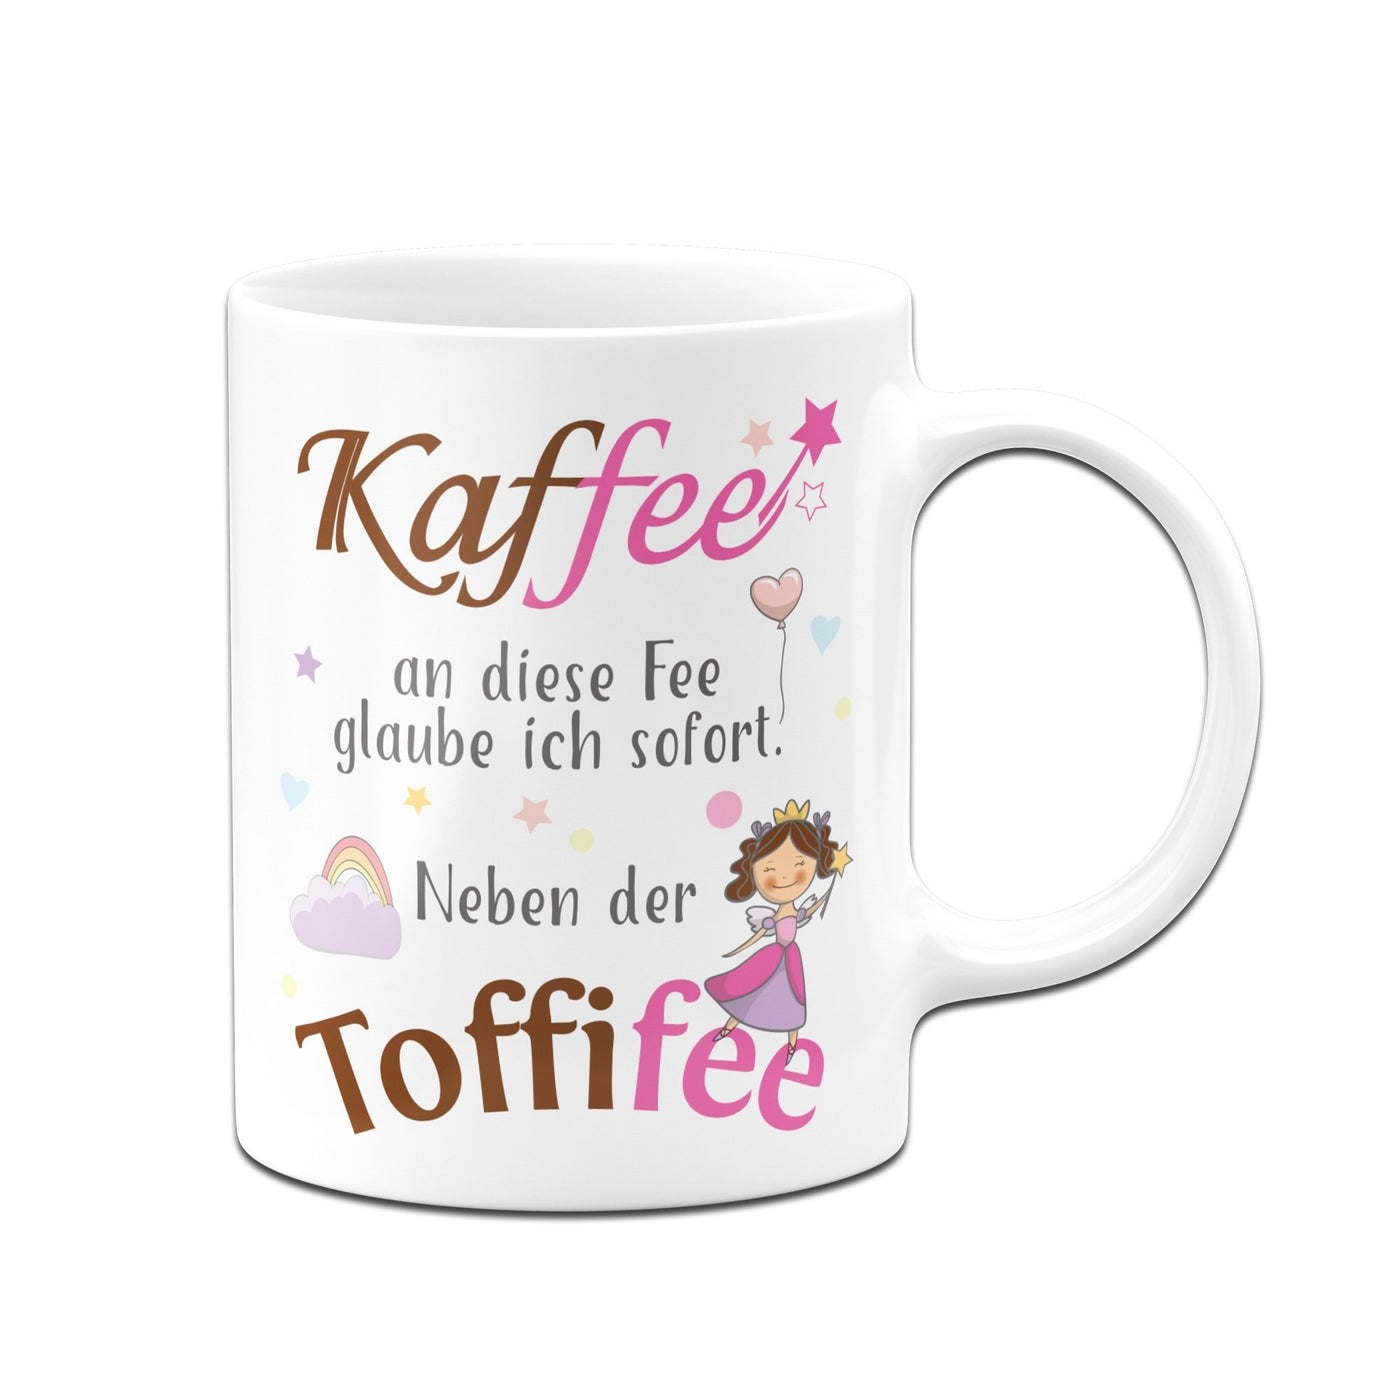 Bild: Tasse - Kaffee Fee - Toffifee Geschenkidee